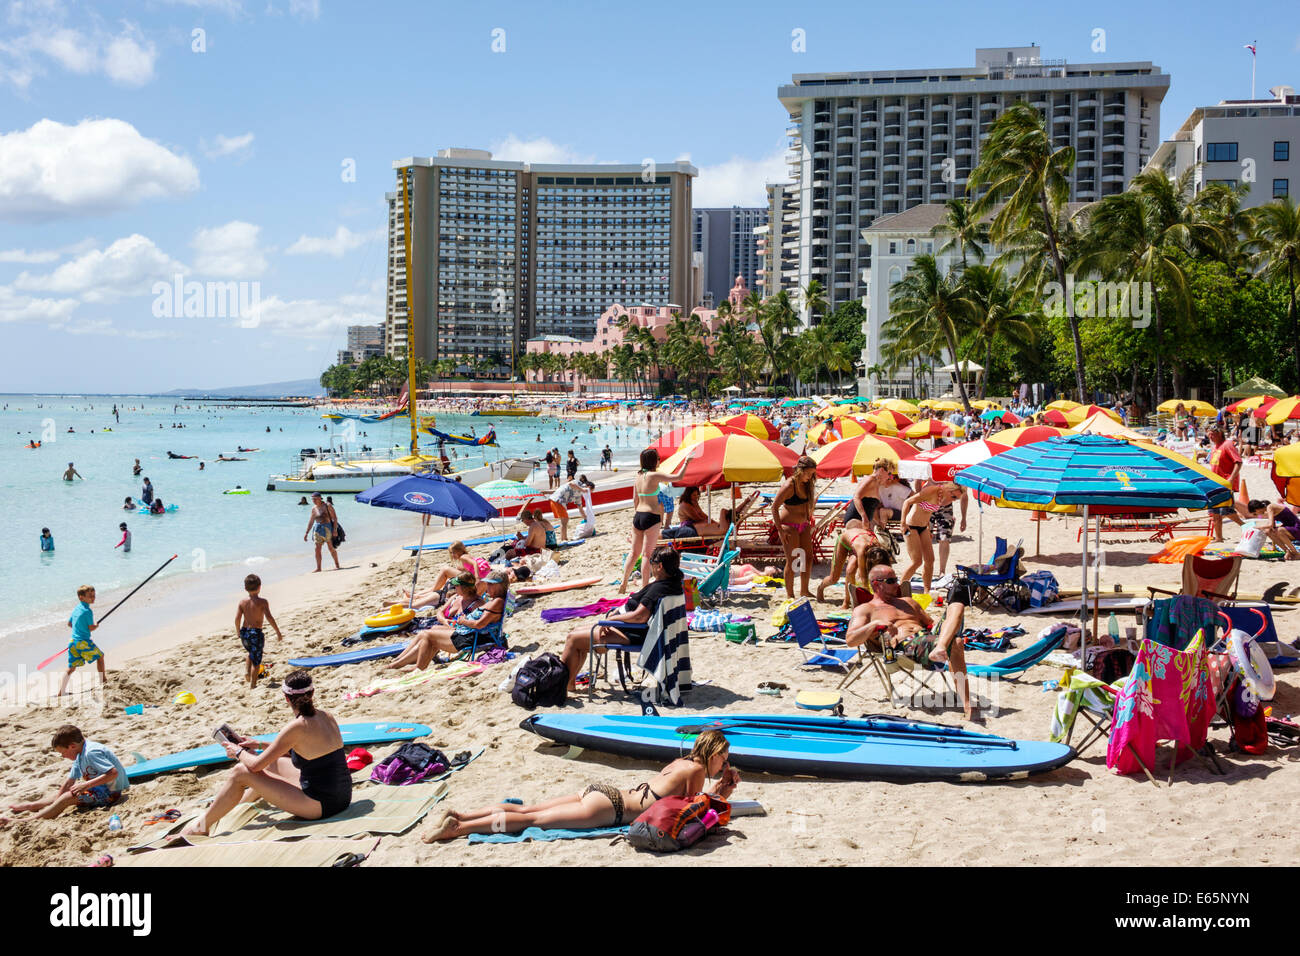 Honolulu Hawaii, Oahu, Hawaiian, Waikiki Beach, Resort, Kuhio Beach State Park, Wasser im Pazifischen Ozean, Sonnenanbeter, Sonnenschirme, Familien, überfüllt, Sheraton Waikiki, h Stockfoto